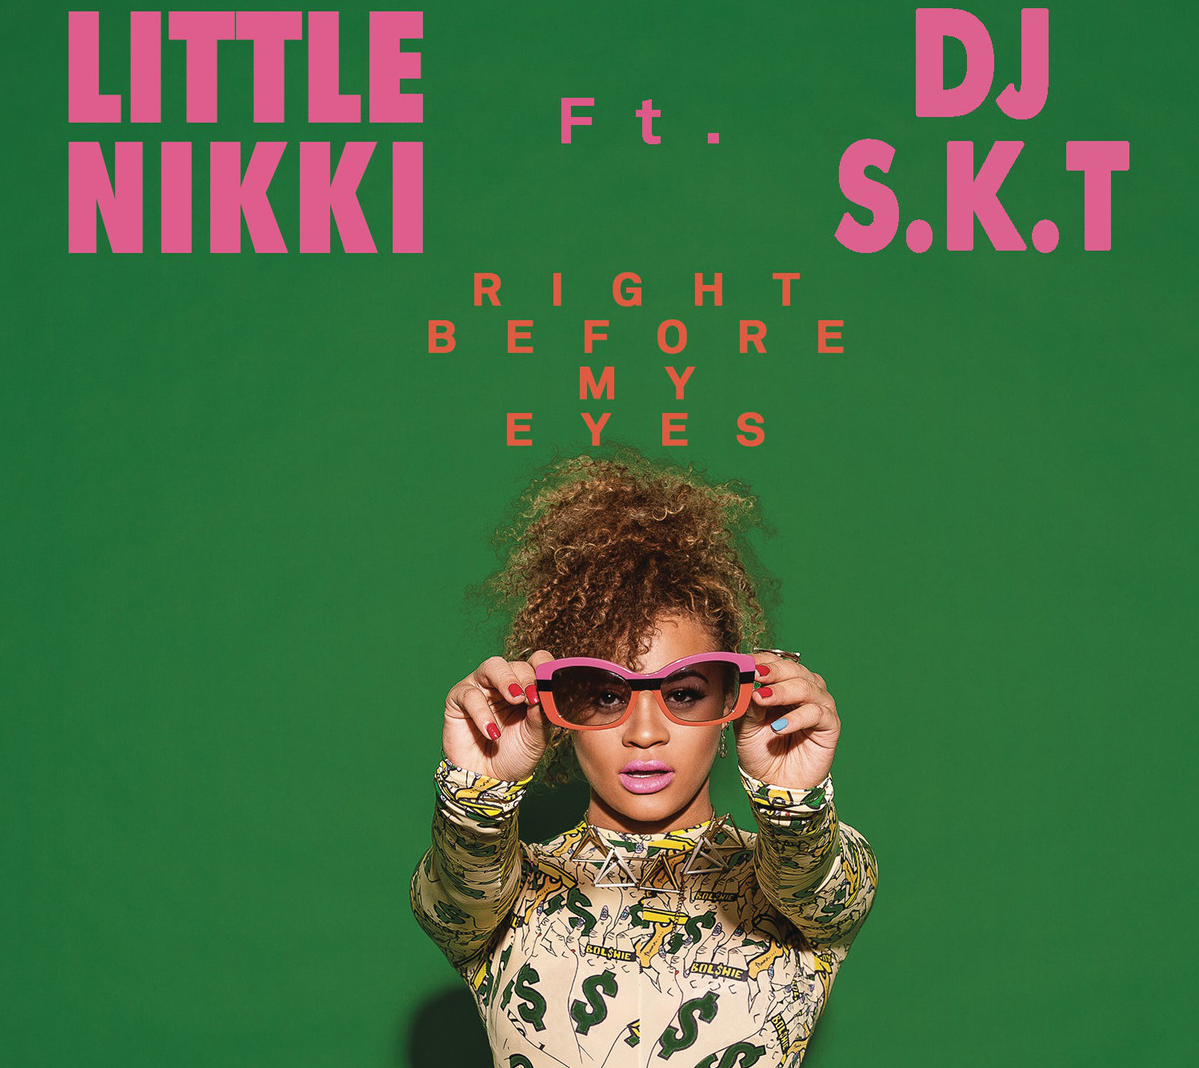 Nikki little. Исполнительница little Beat. Little Nicky муз ТВ.